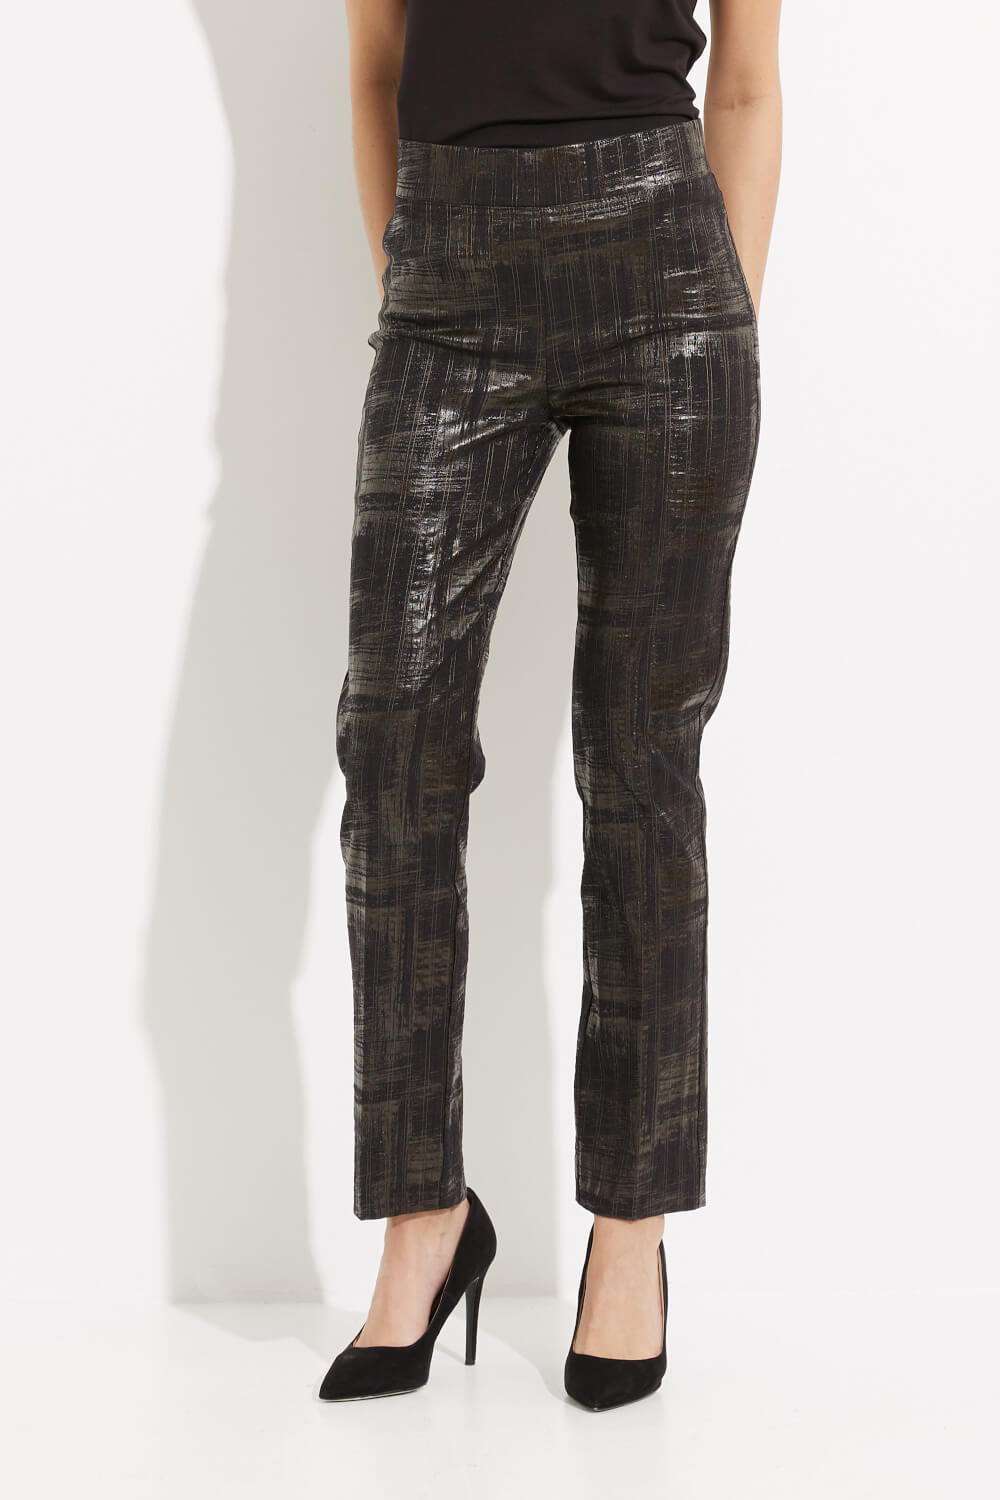 Metallic Straight Leg Pants Style 233276. Black/gold